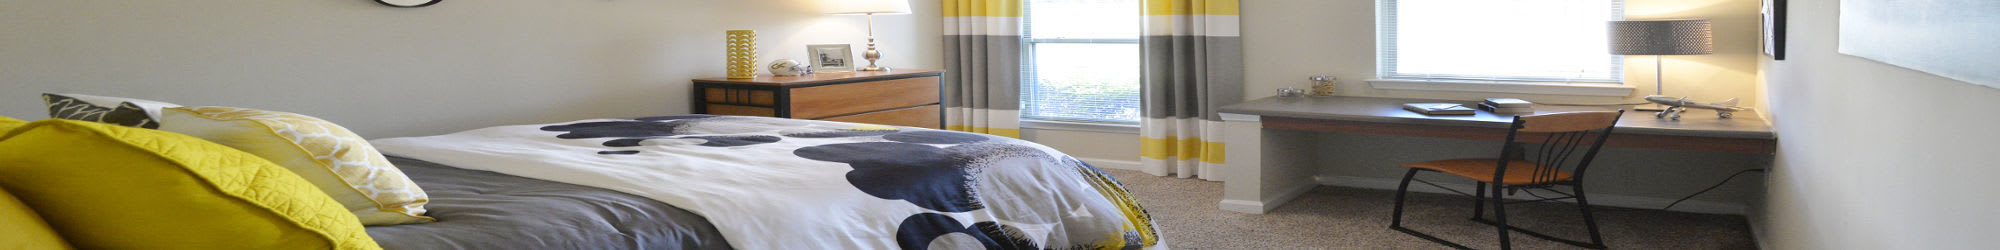 2 3 4 Bedroom Student Apartments In Atlanta Ga Near